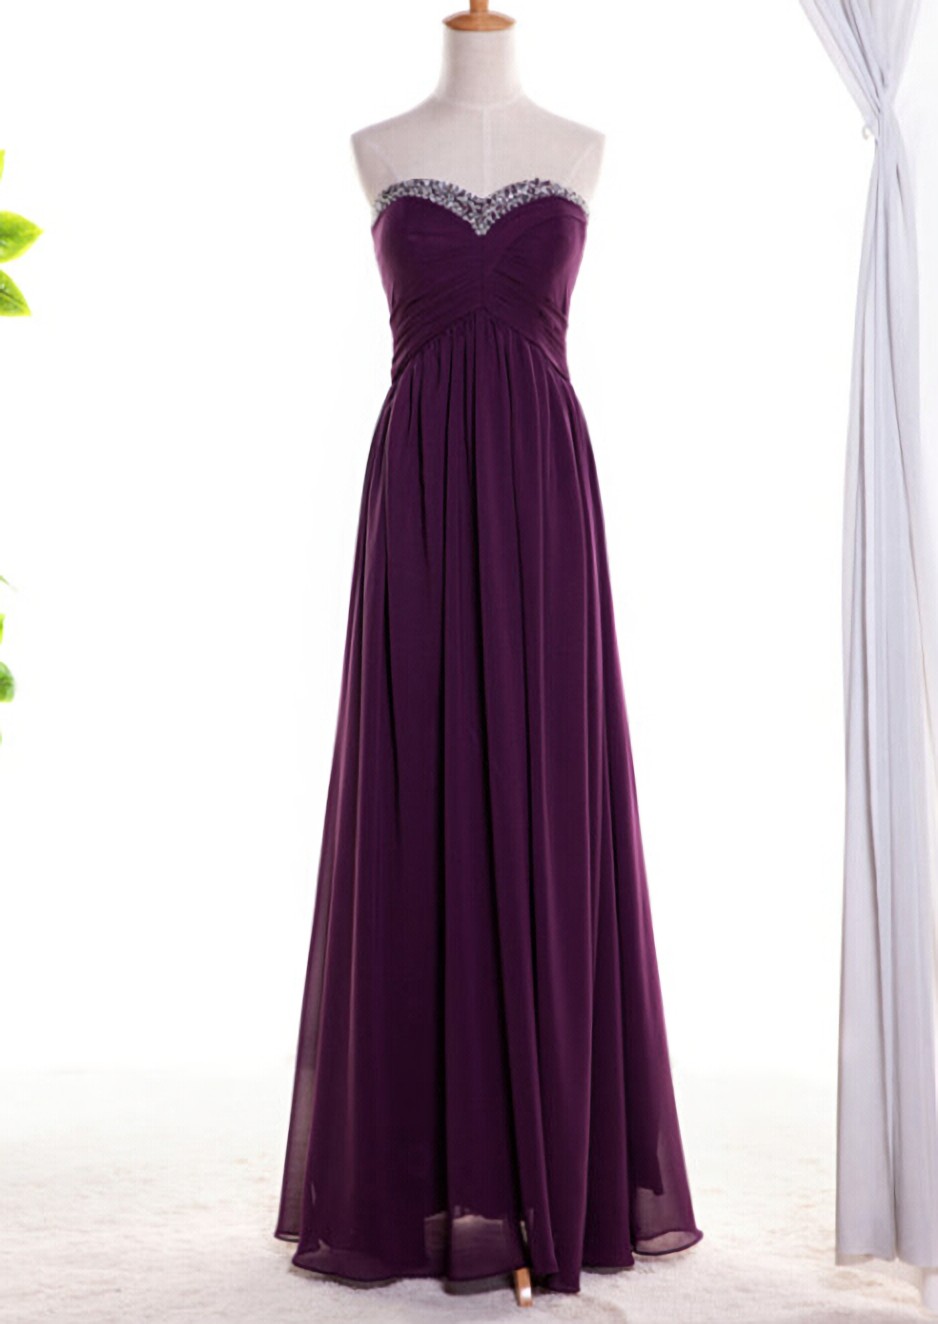 Elegant Chiffon Sleeveless Formal Prom Dress, Beautiful Long Prom Dress, Banquet Party Dress